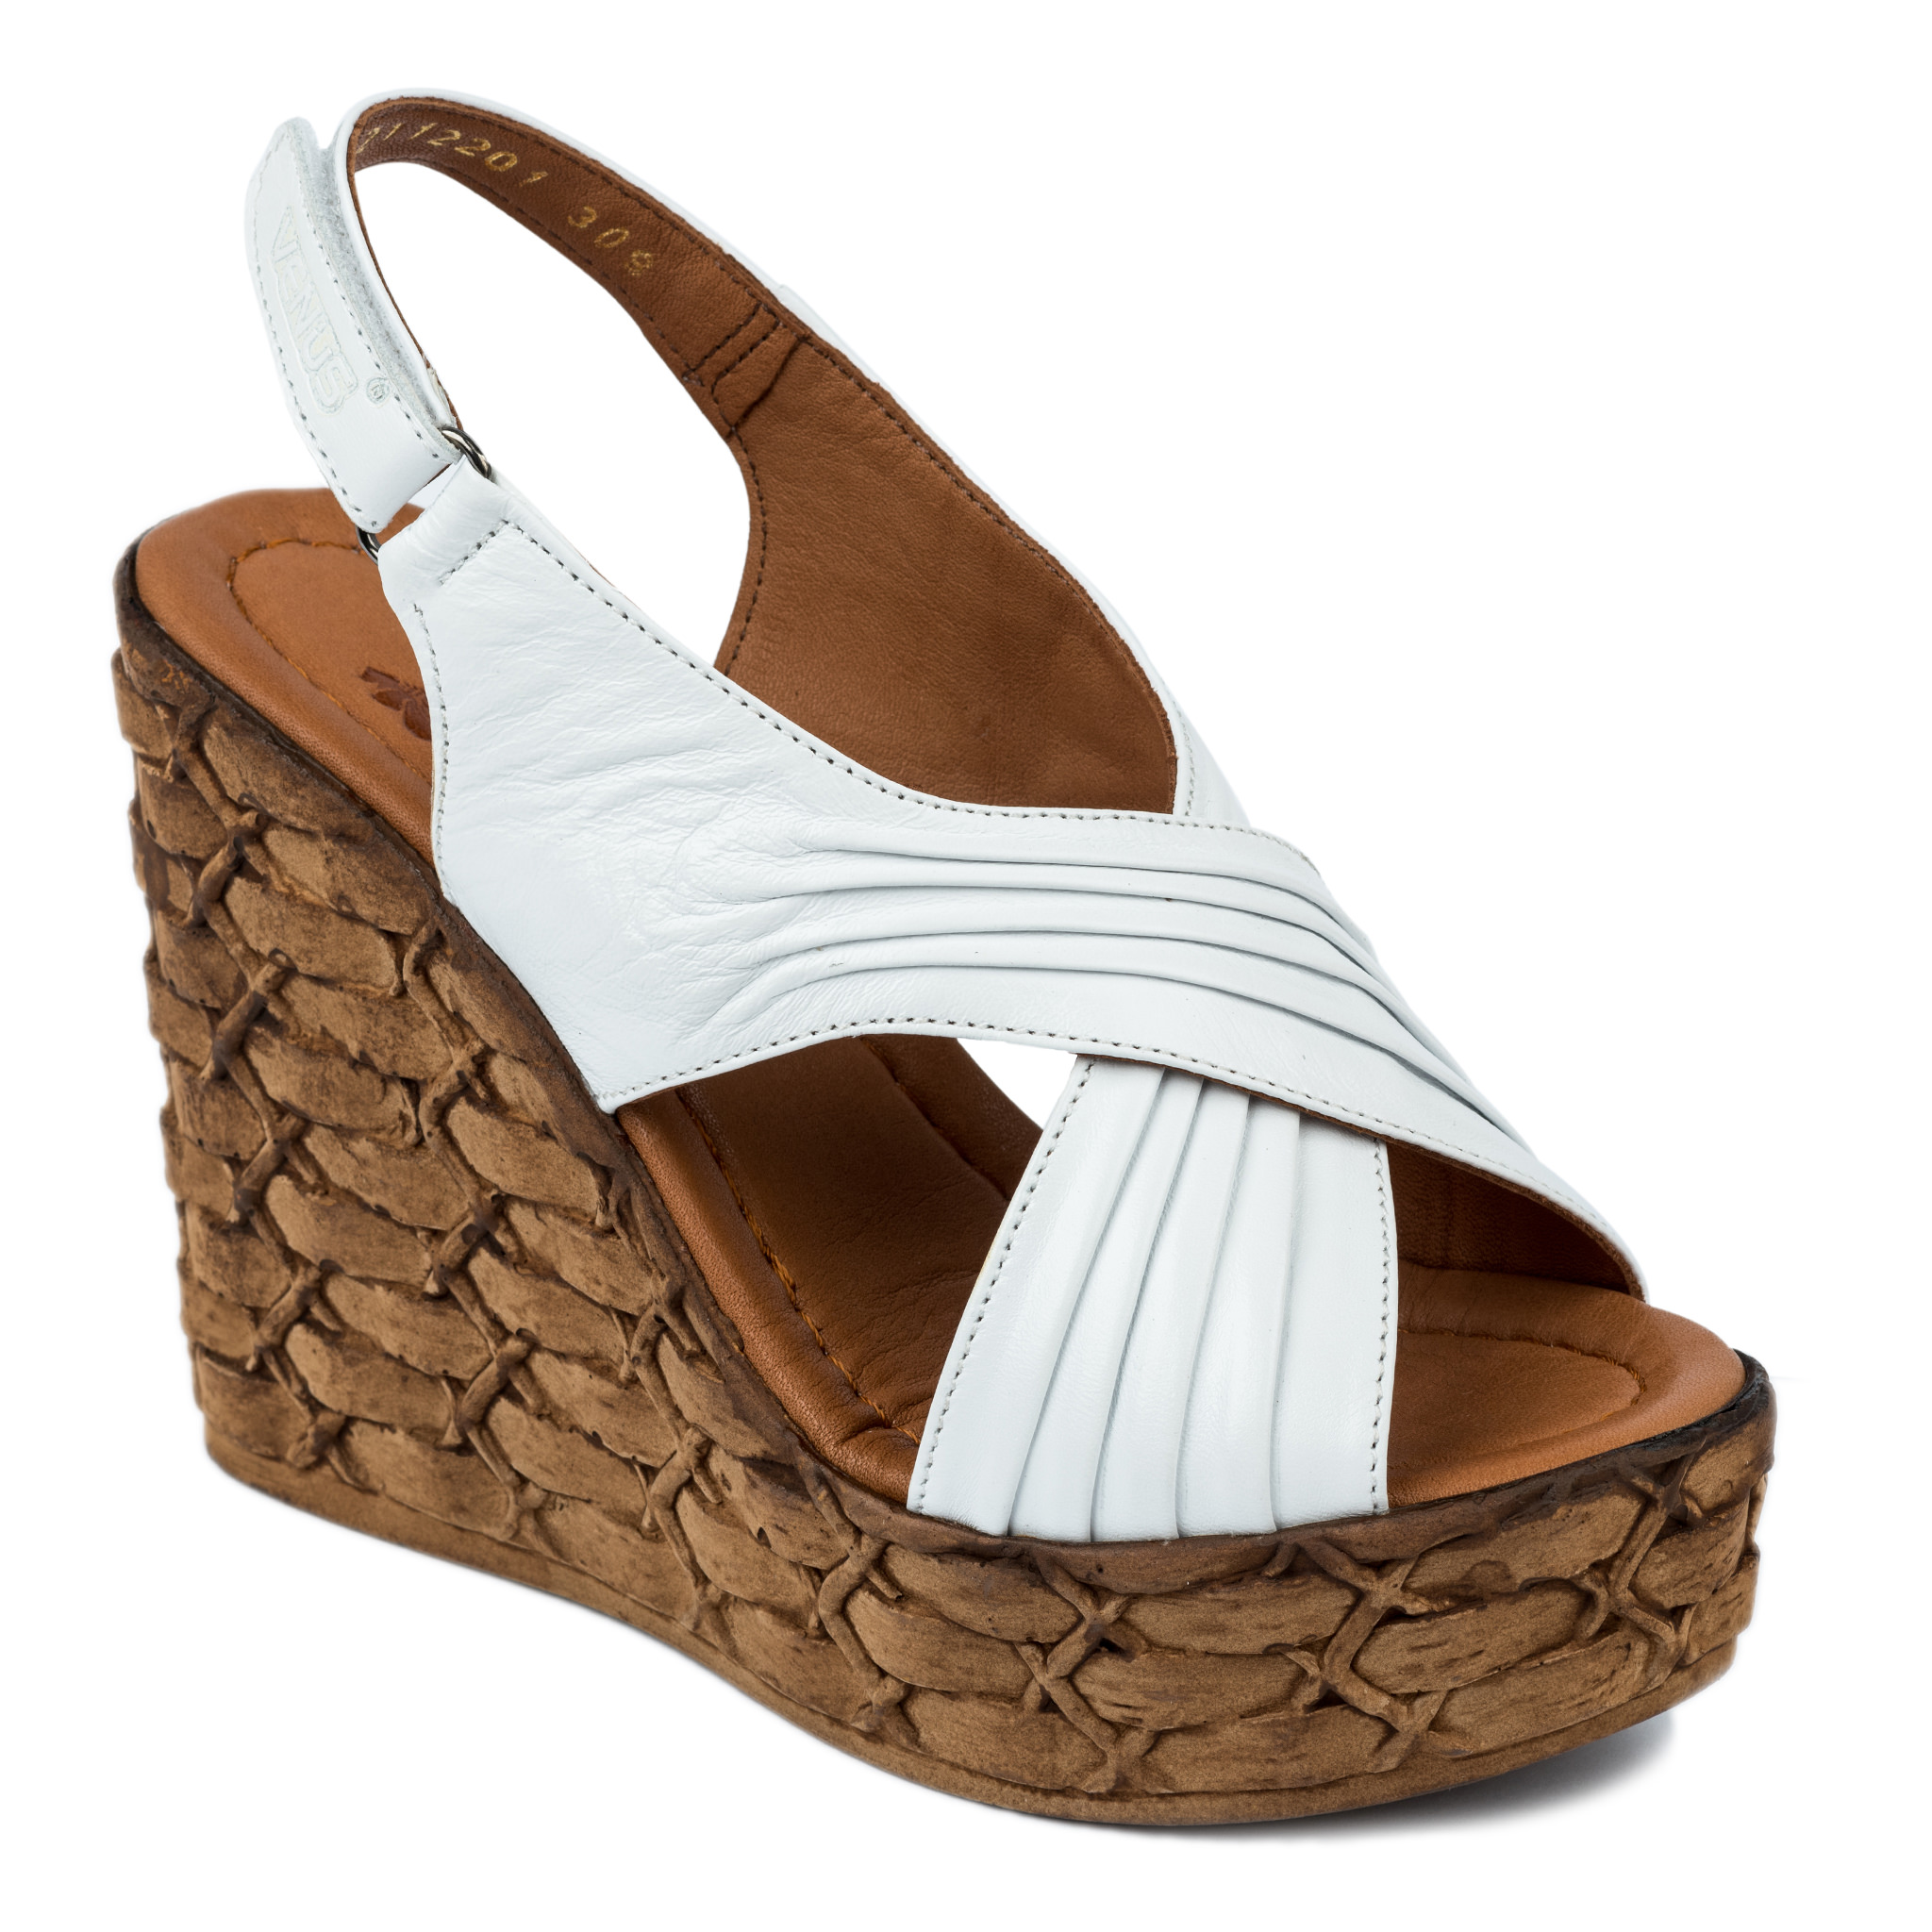 Women sandals A256 - WHITE